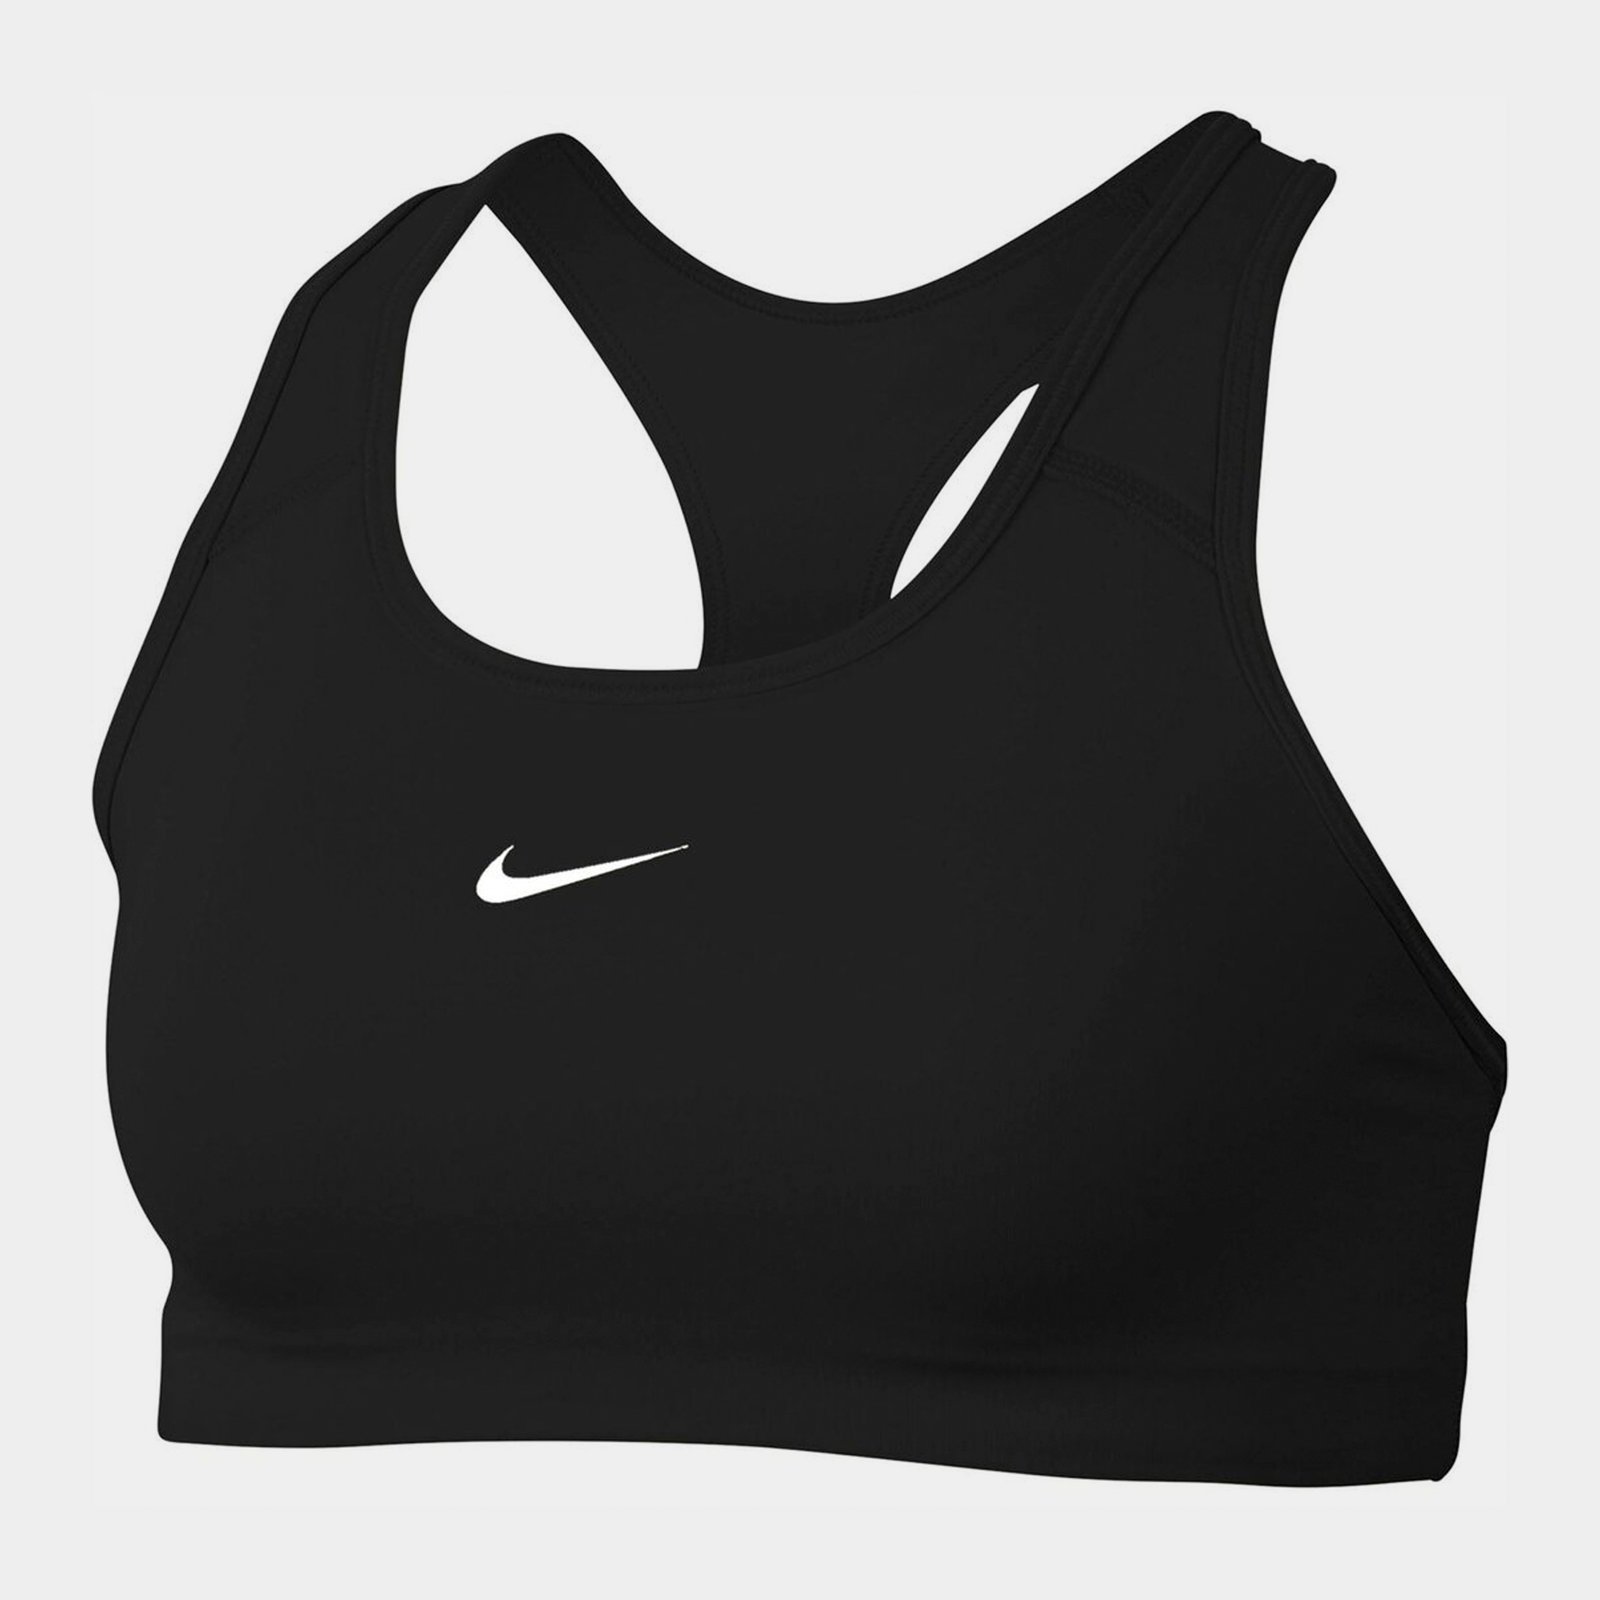 Nike Women's Cropped laced Training Tank Sports Bra (Purple Smoke, Medium)  